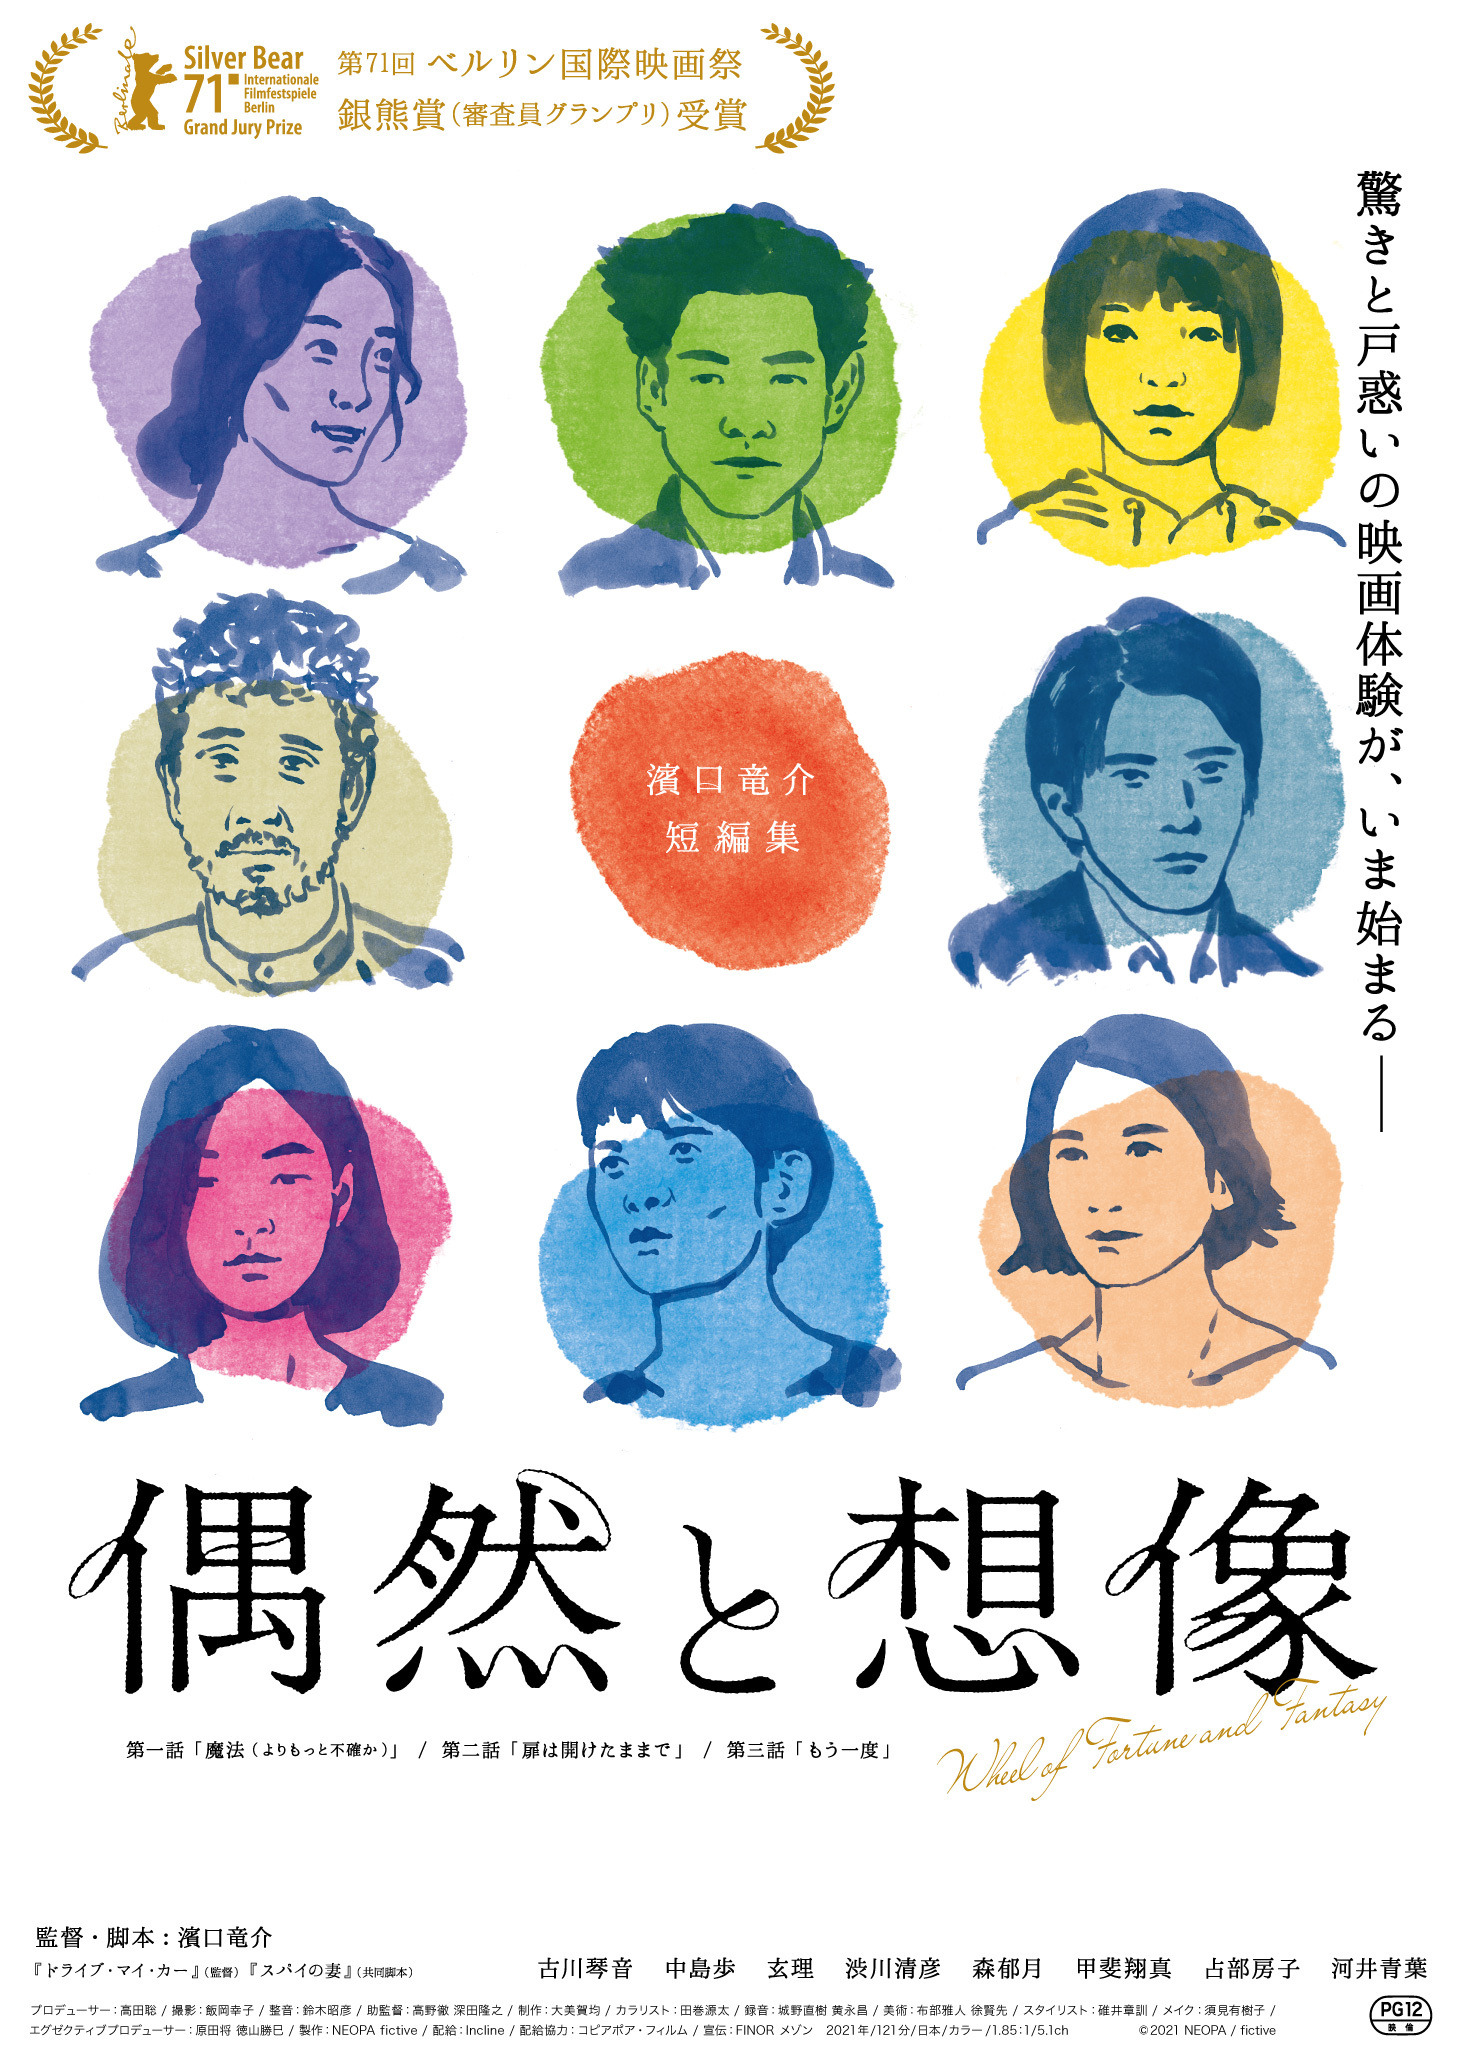 Mega Sized Movie Poster Image for Gûzen to sôzô (#3 of 5)